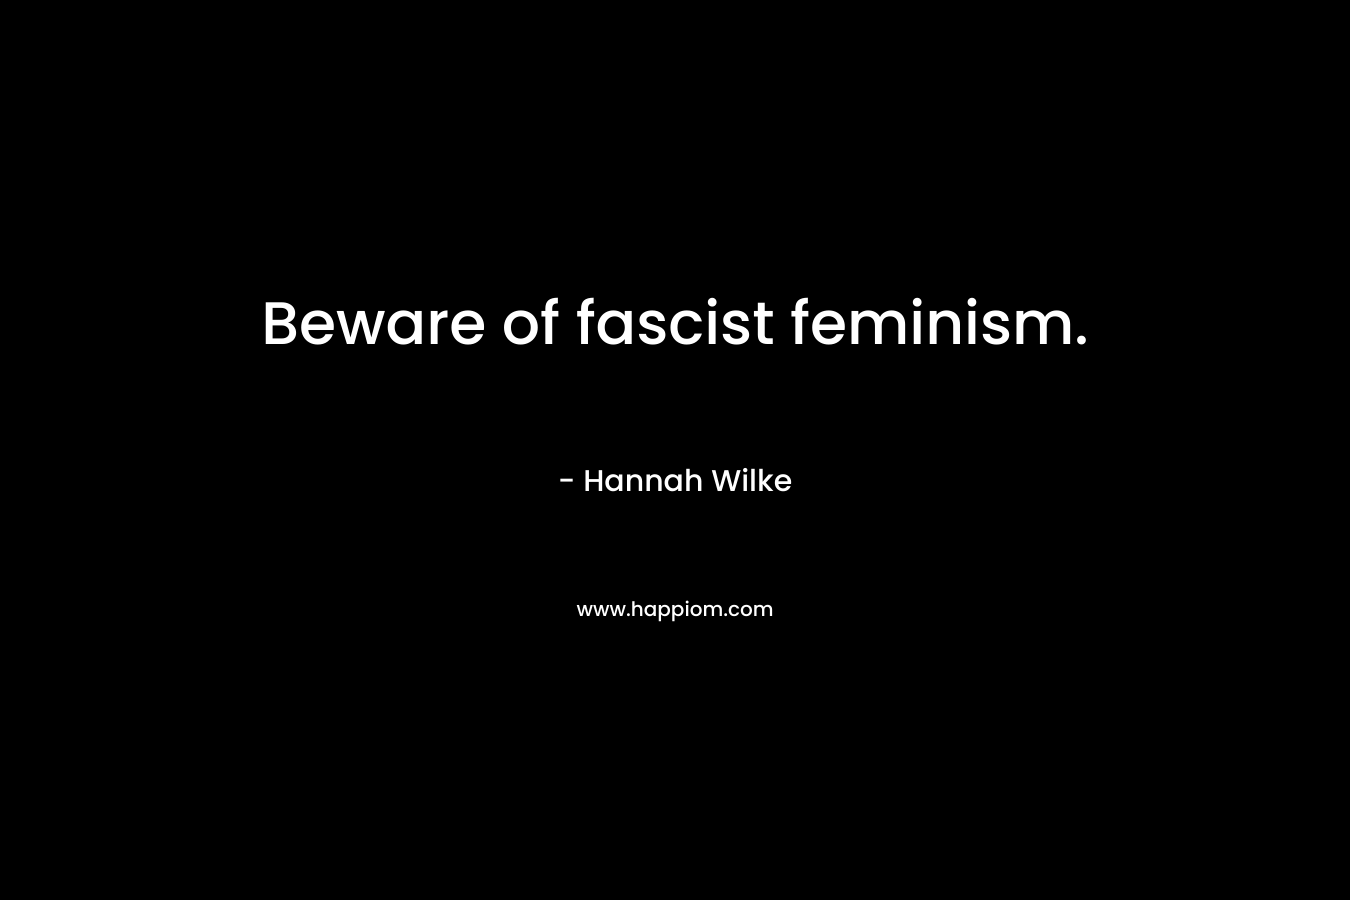 Beware of fascist feminism. – Hannah Wilke